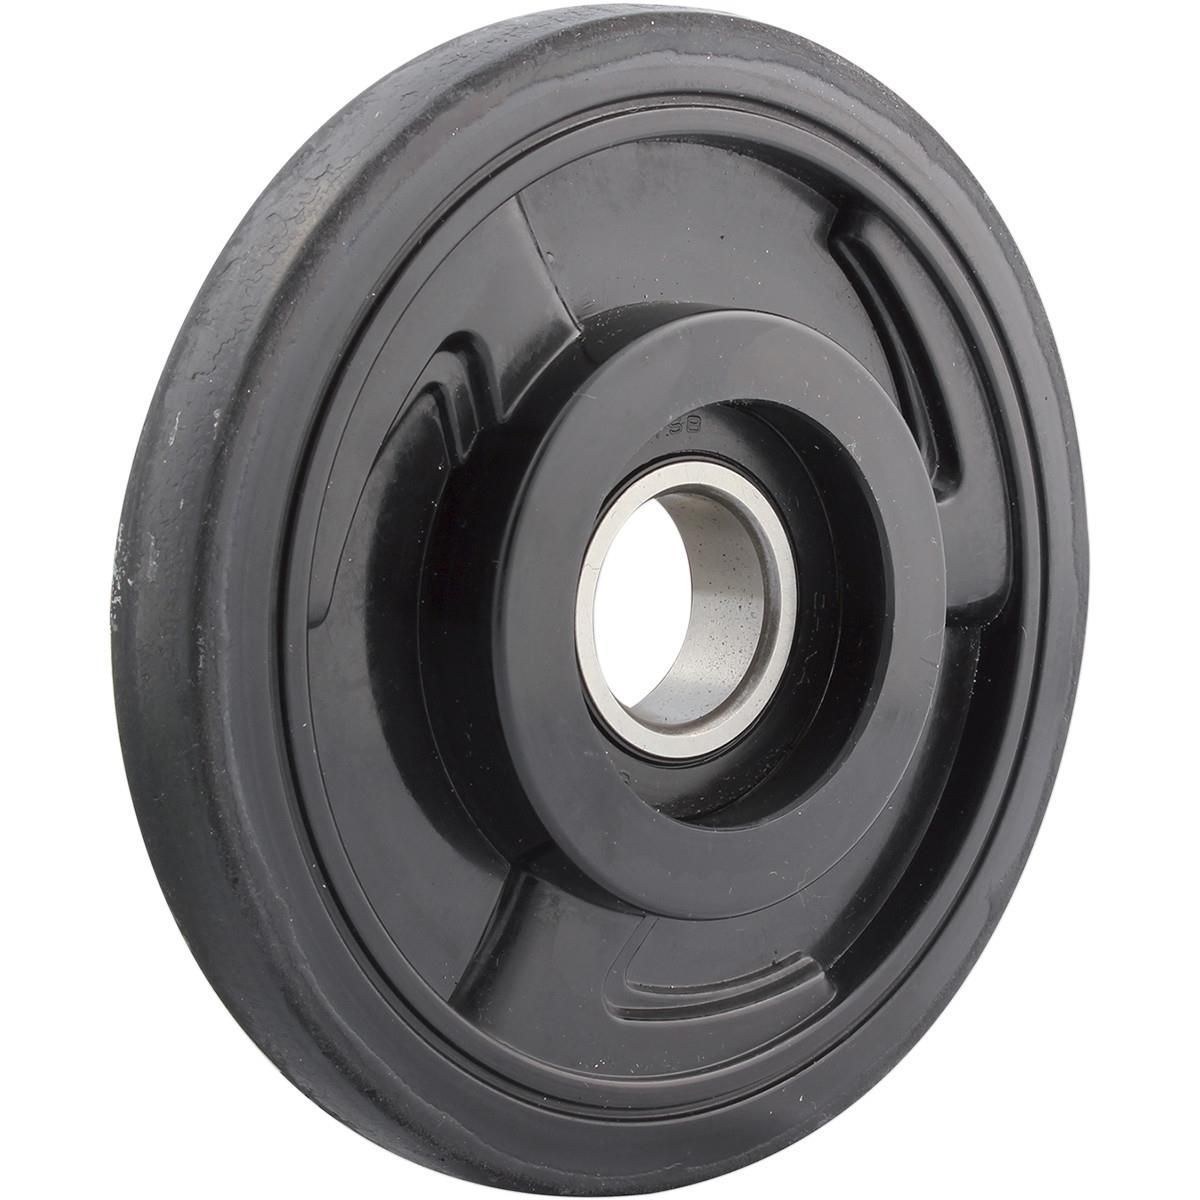 3309-KIMPEX-04-1130-20 Colored Idler Wheel - 130mm x 1in. - Black